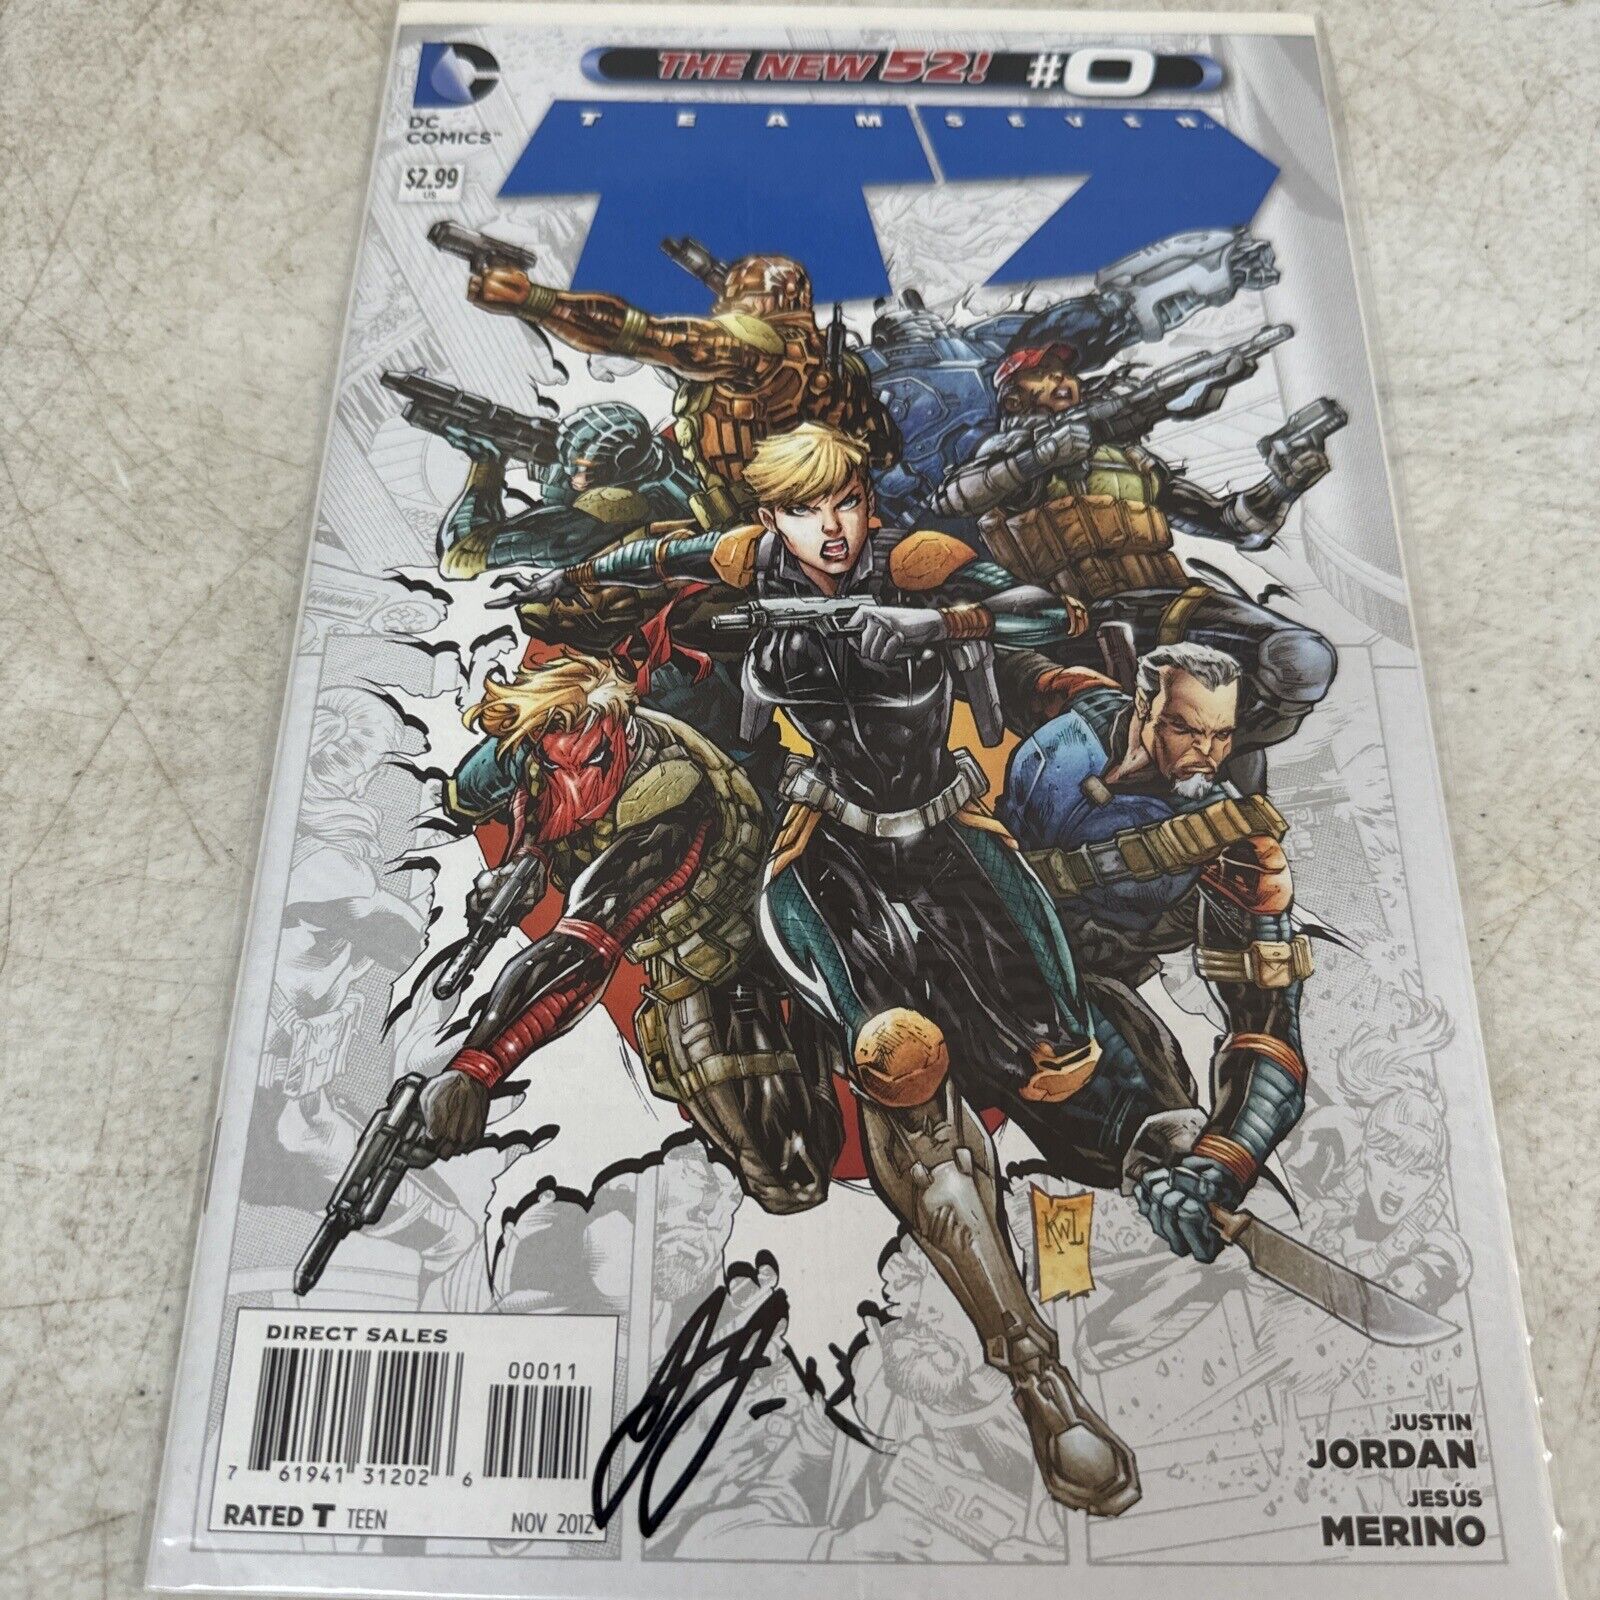 Team Seven #0 (2012), The New 52, DC Comics Autographed By Justin Jordan